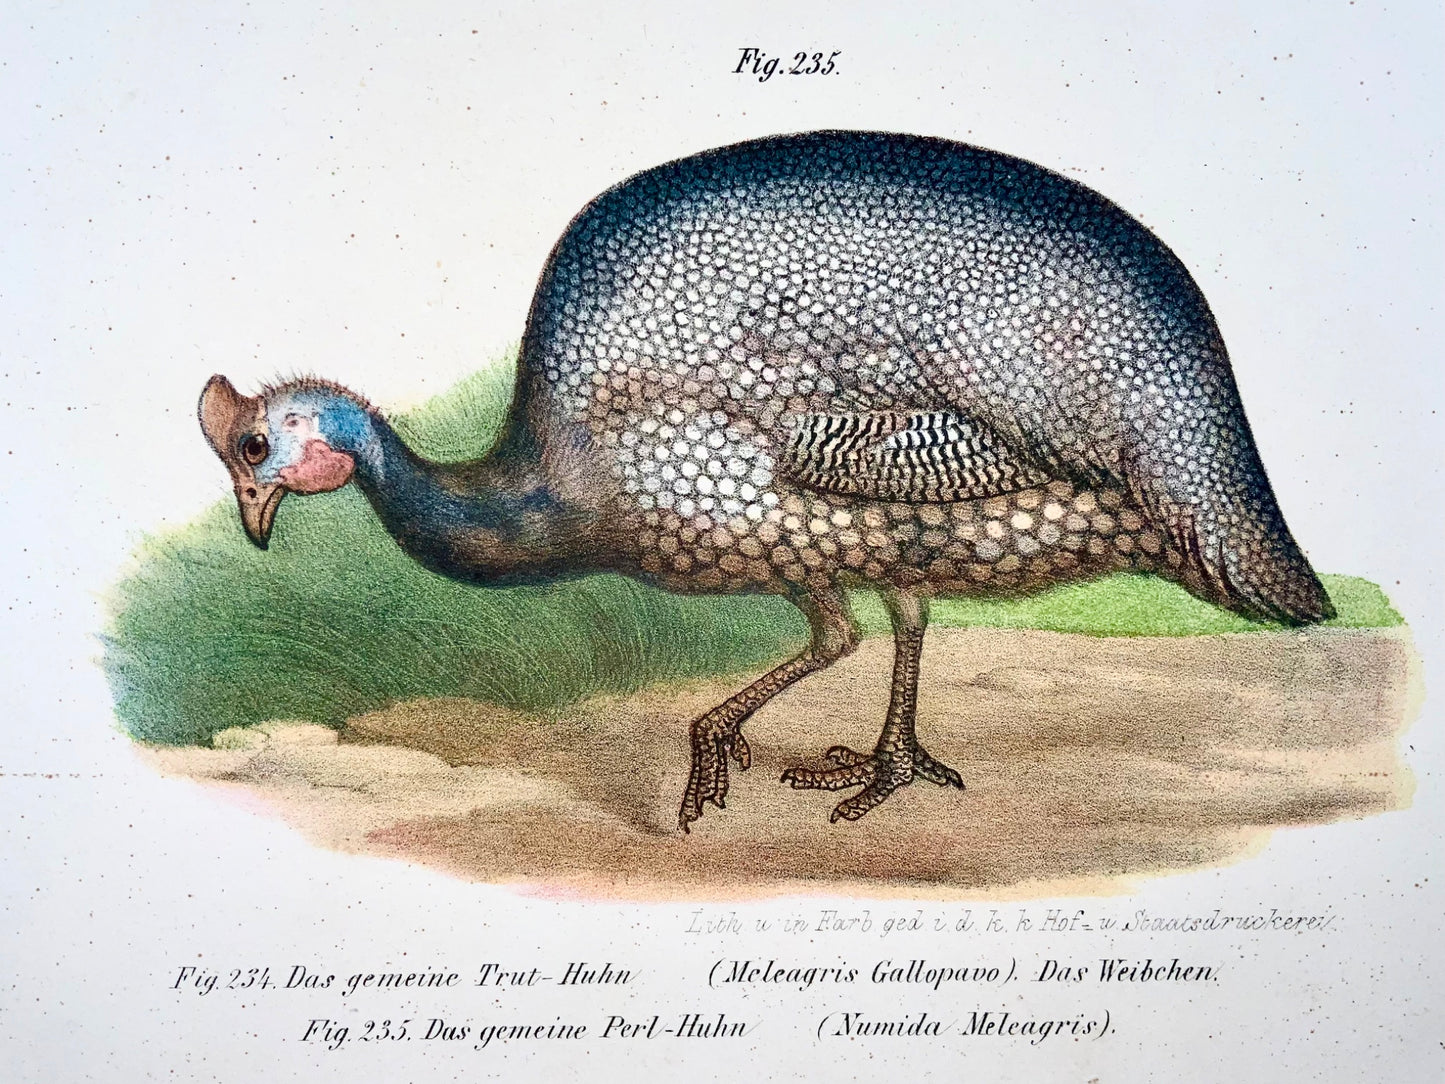 1860 Turkey, Guinea fowl, Fitzinger, colour lithograph, hand finish, ornithology